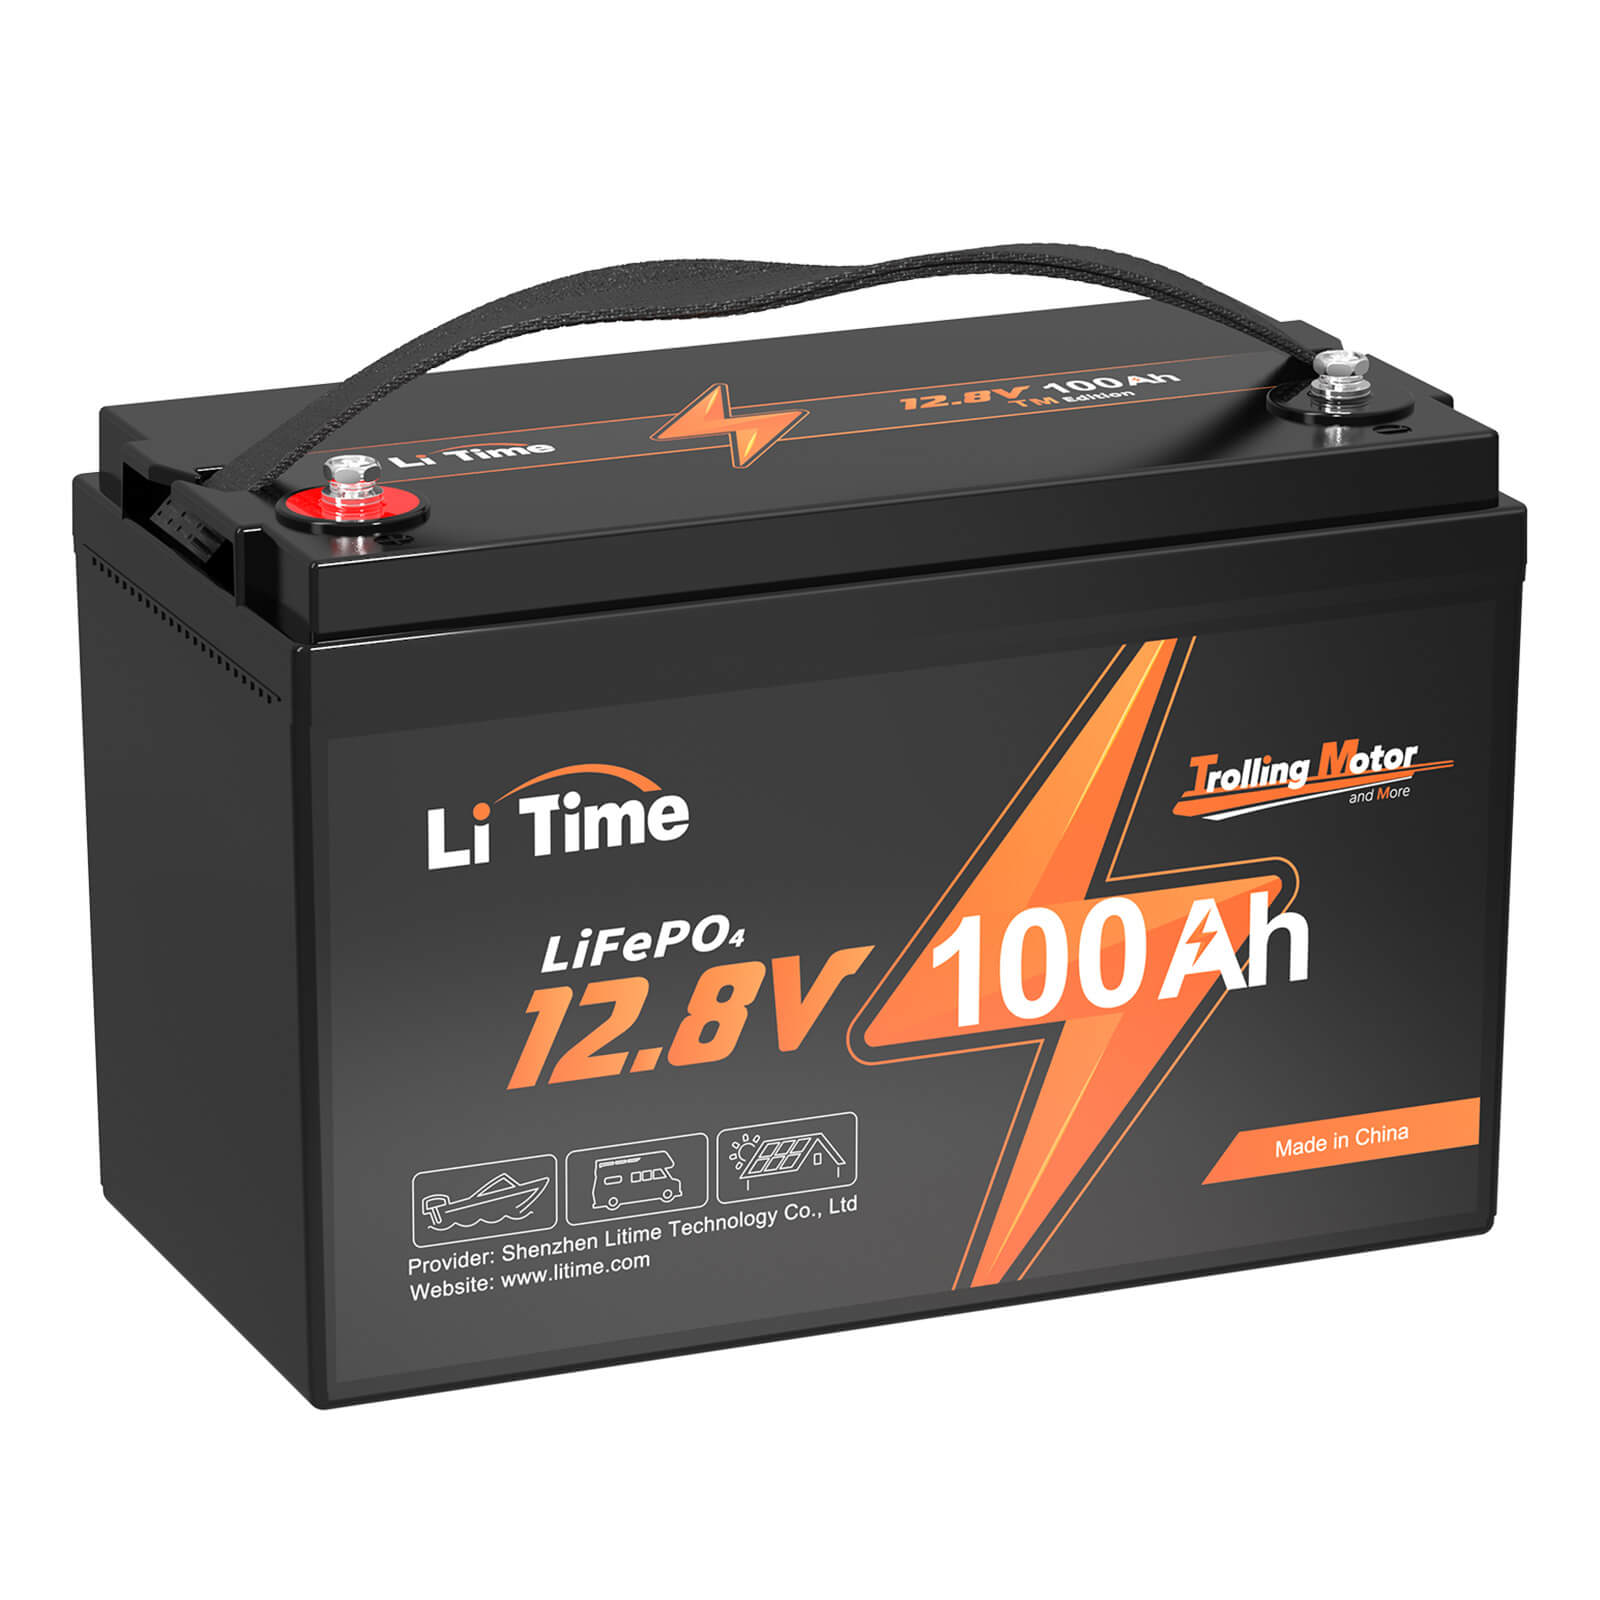 【0% MwSt.】LiTime 12V 100Ah TM LiFePO4 Batterie, Tieftemperaturschutz für Trollingmotor